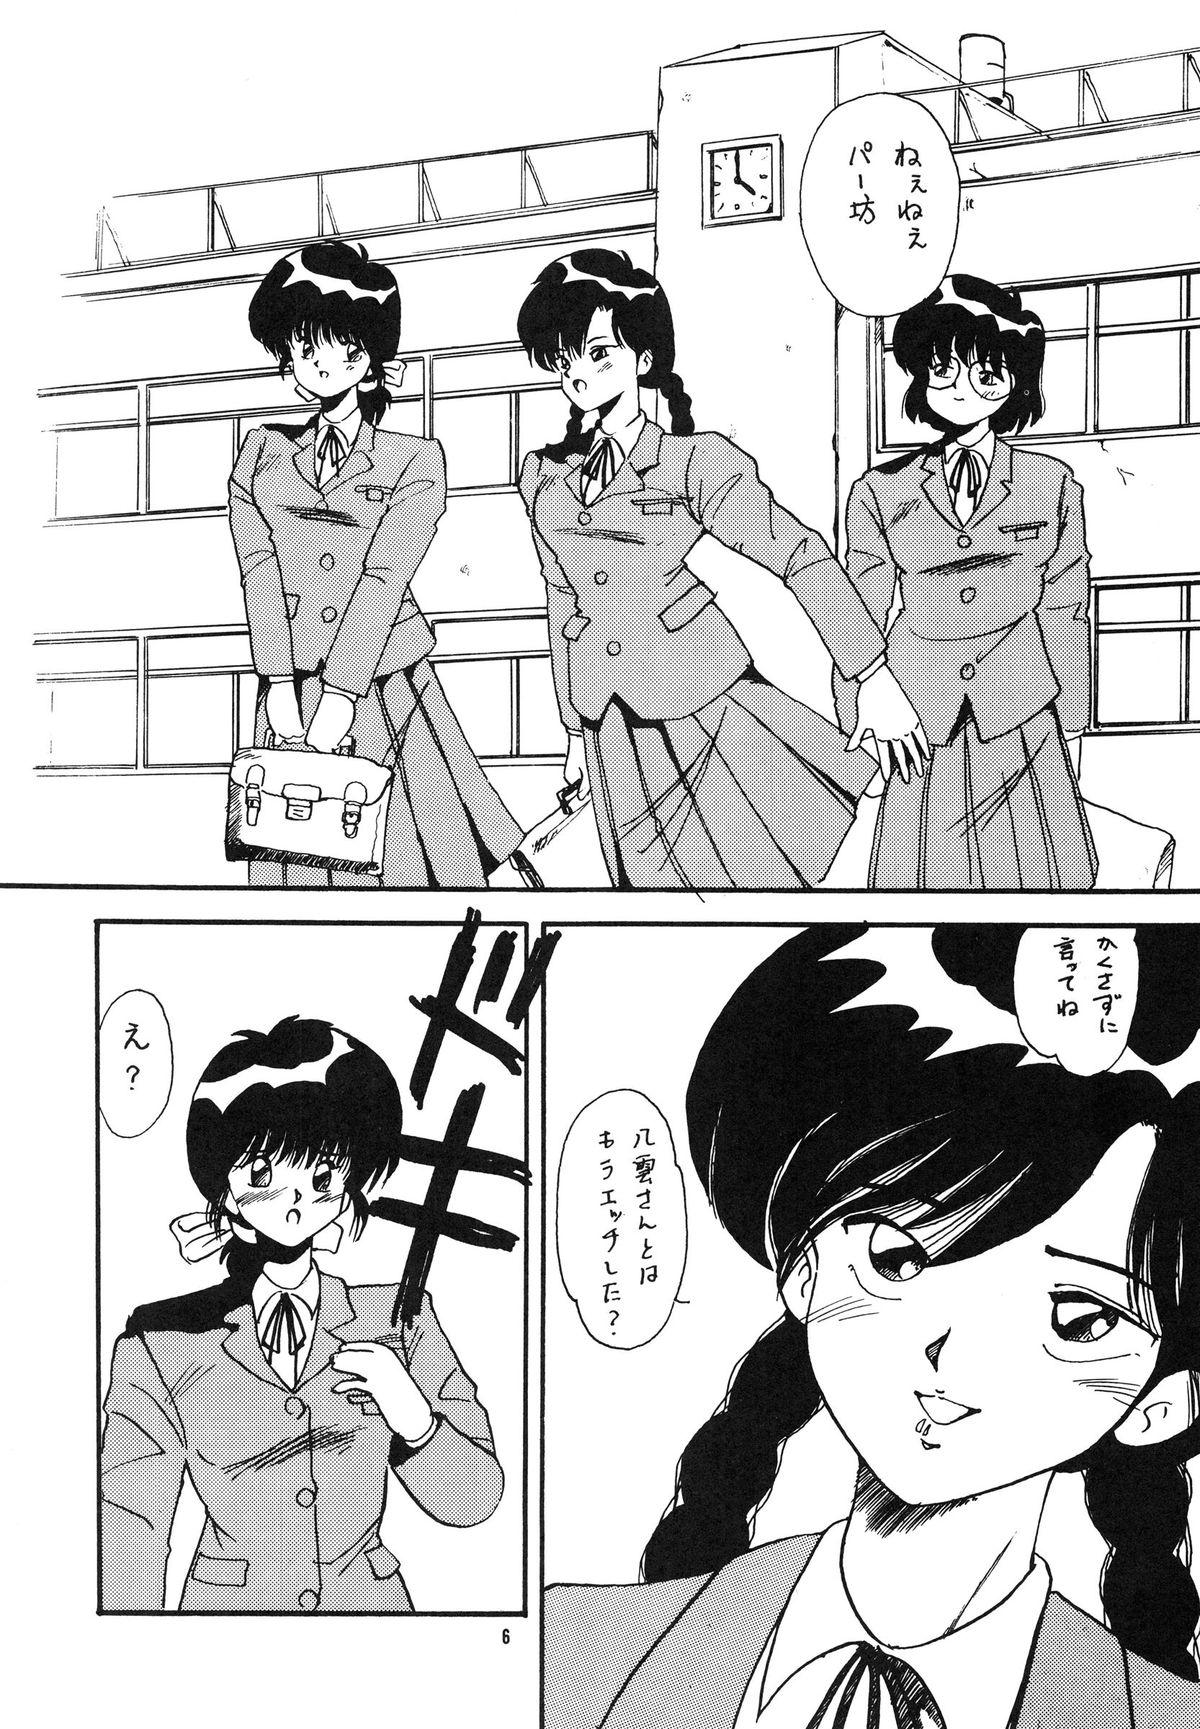 Girl Get Fuck OUTER WORLD - Fushigi no umi no nadia 3x3 eyes Transgender - Page 8